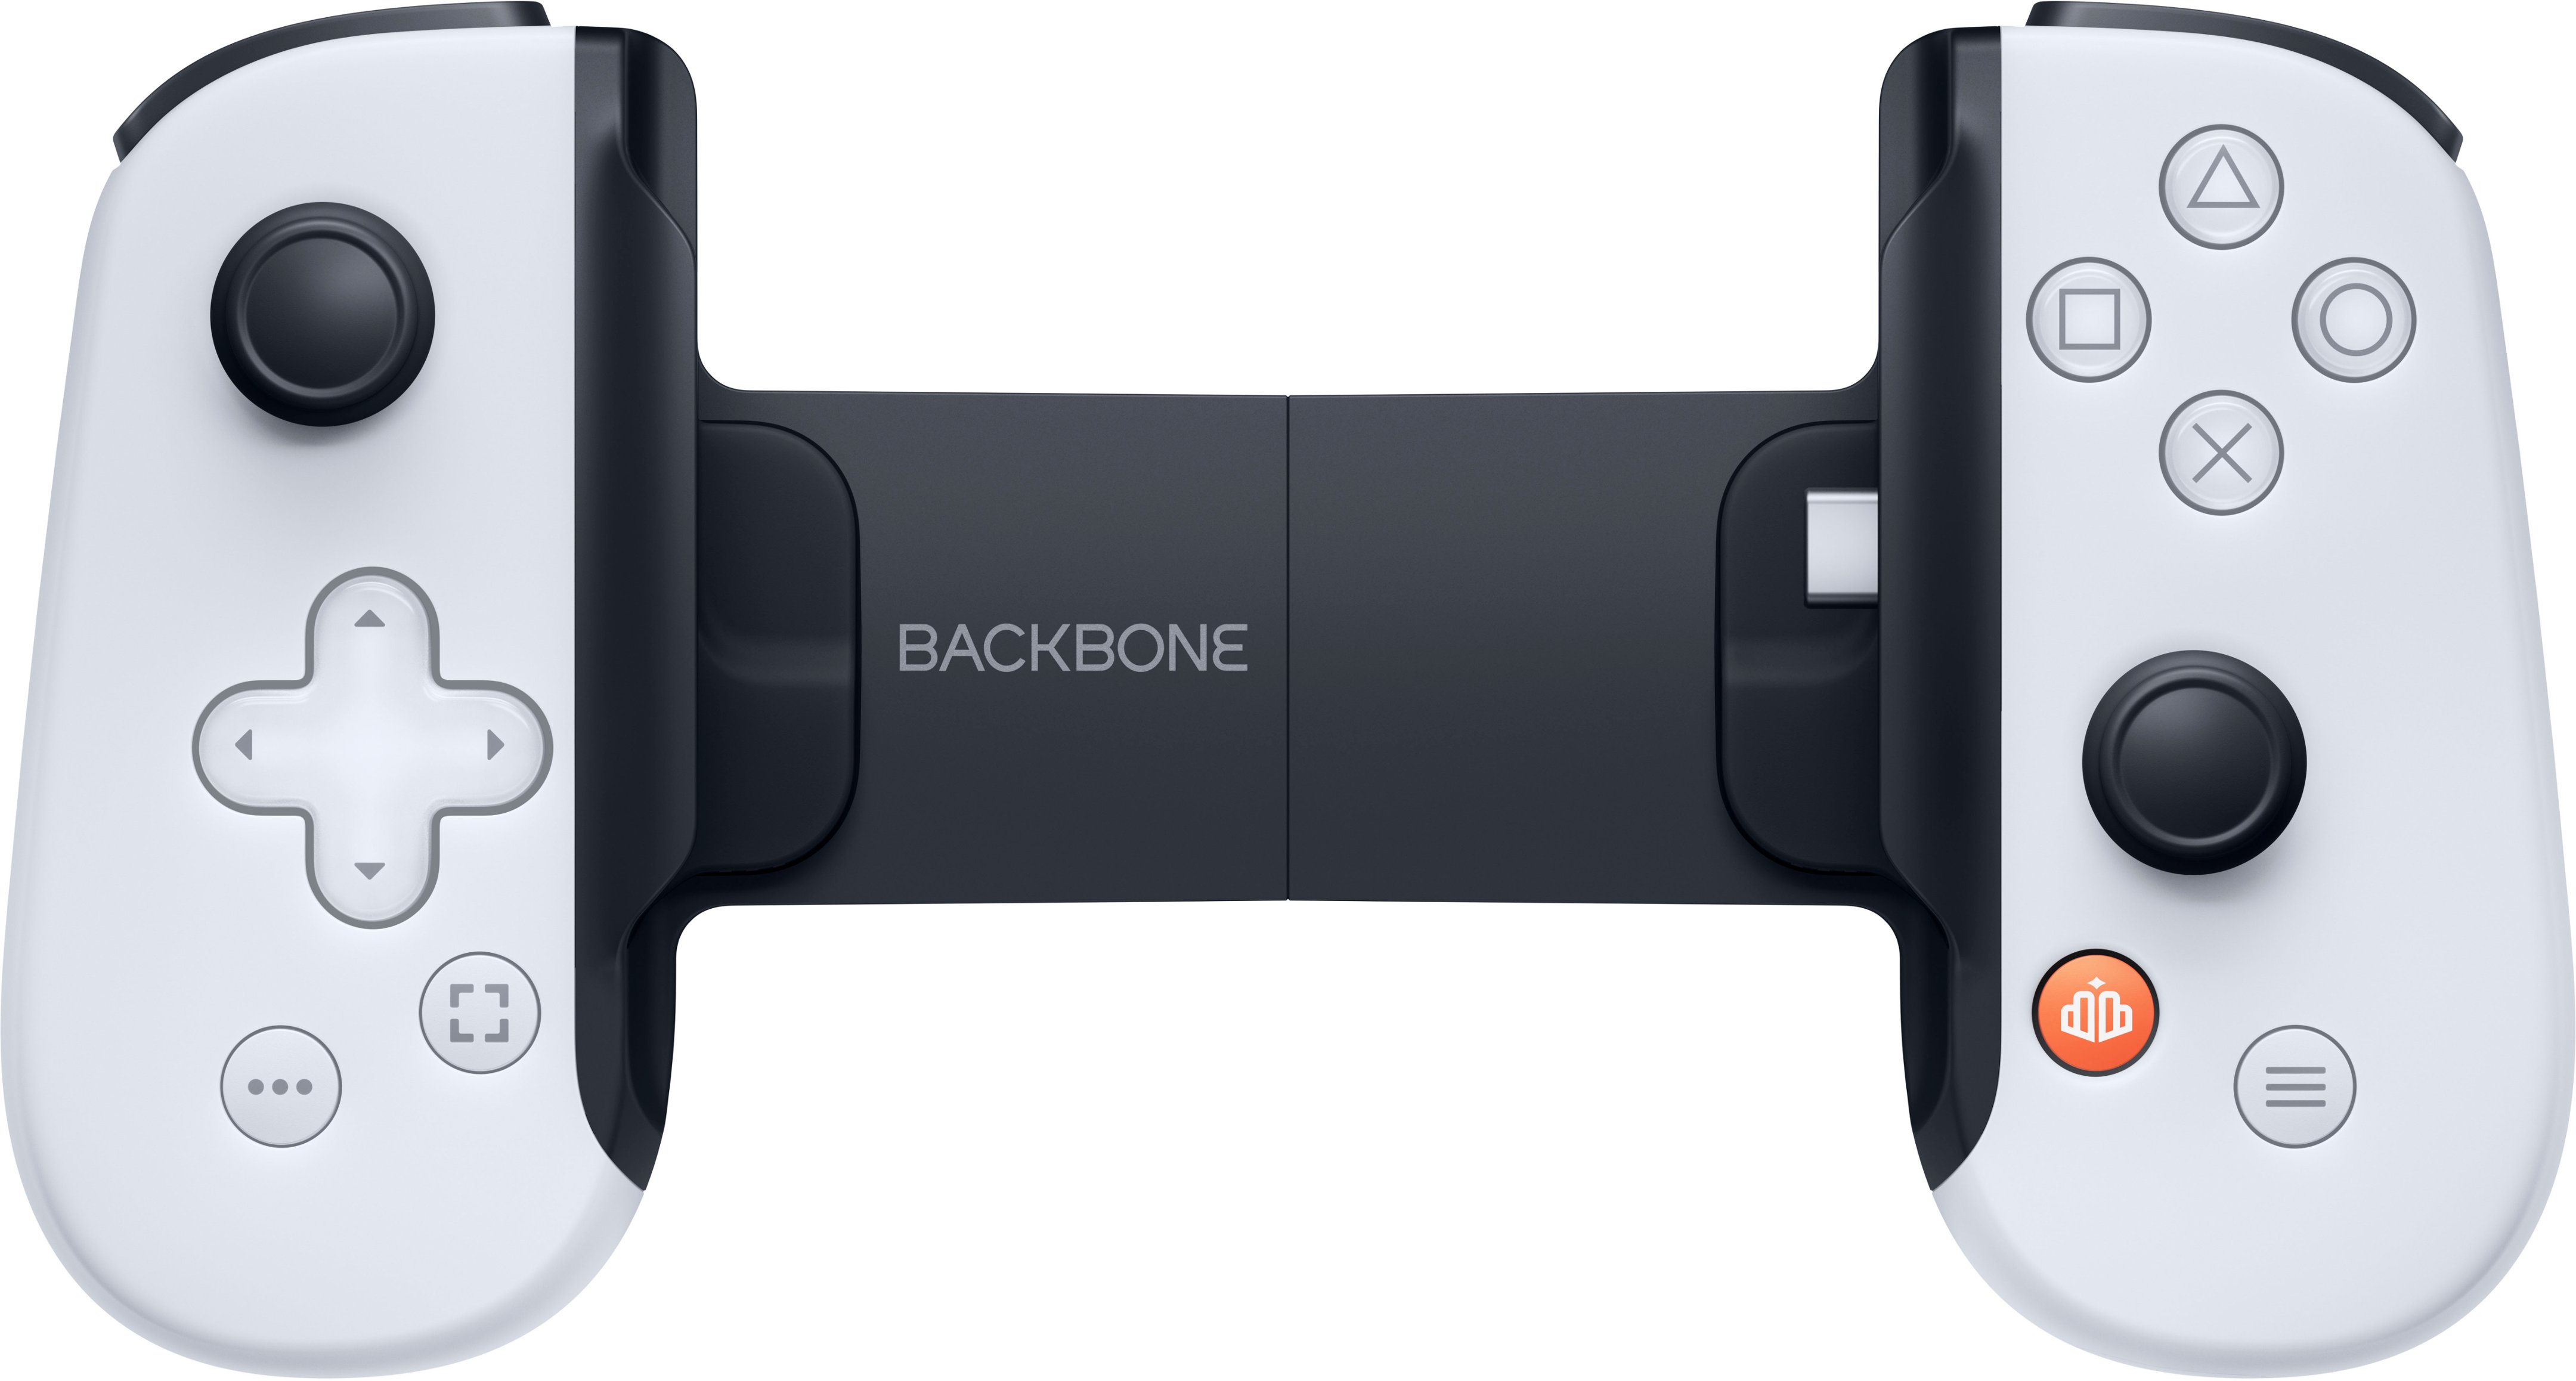 Backbone OnePlayStationEdition BB-51-W-S撮影の際に取り出したのみです